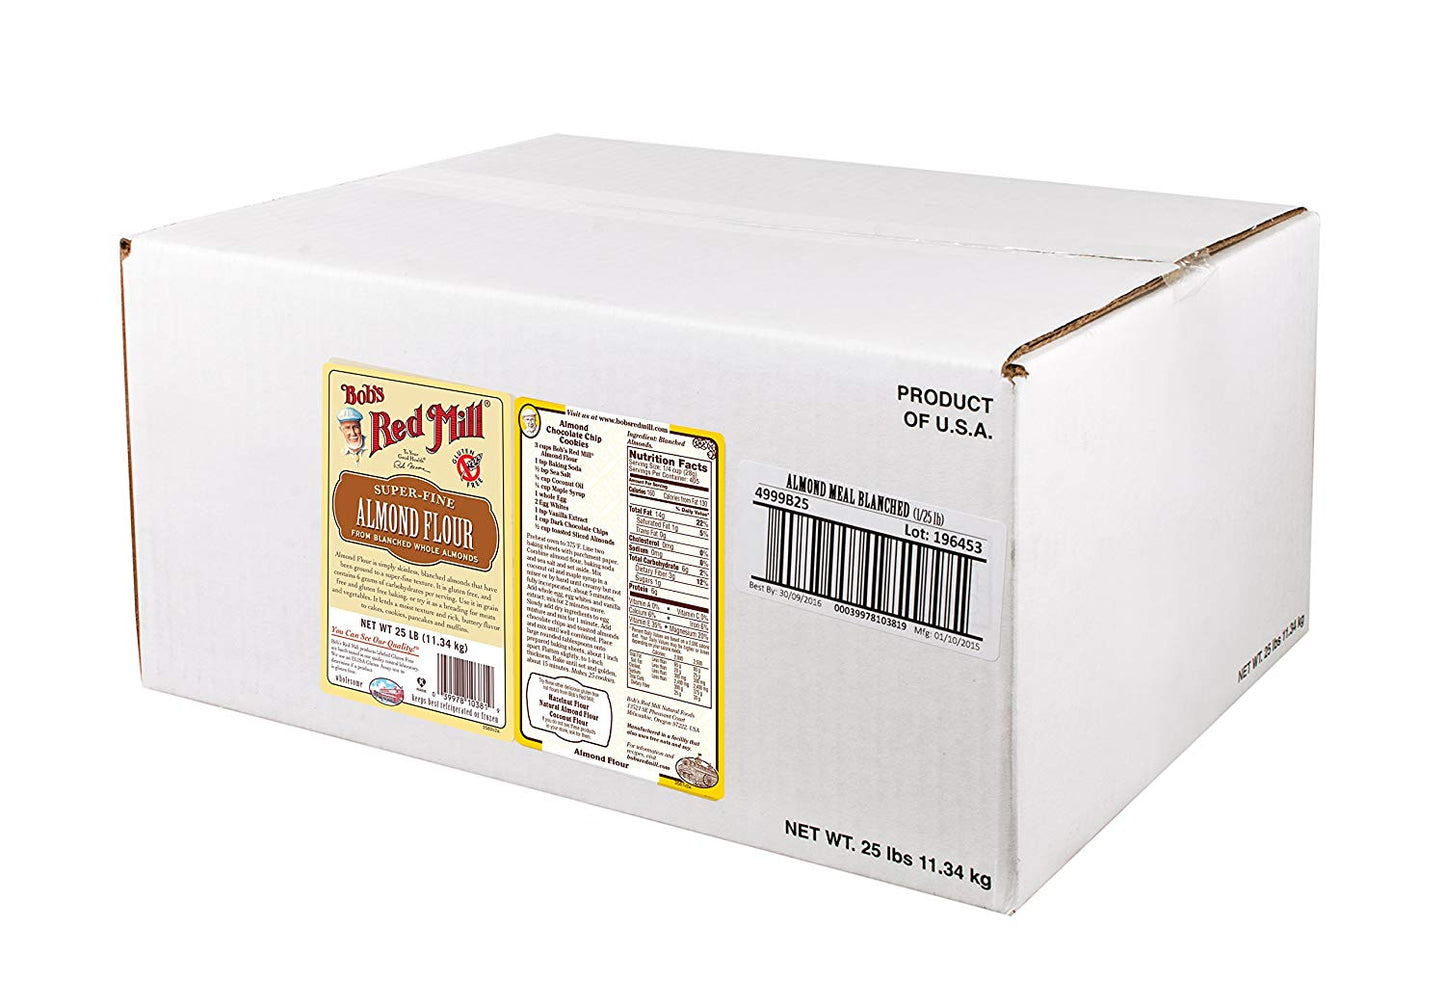 BOBS RED MILL: Bulk Almond Meal Flour, 25 lb - Vending Business Solutions